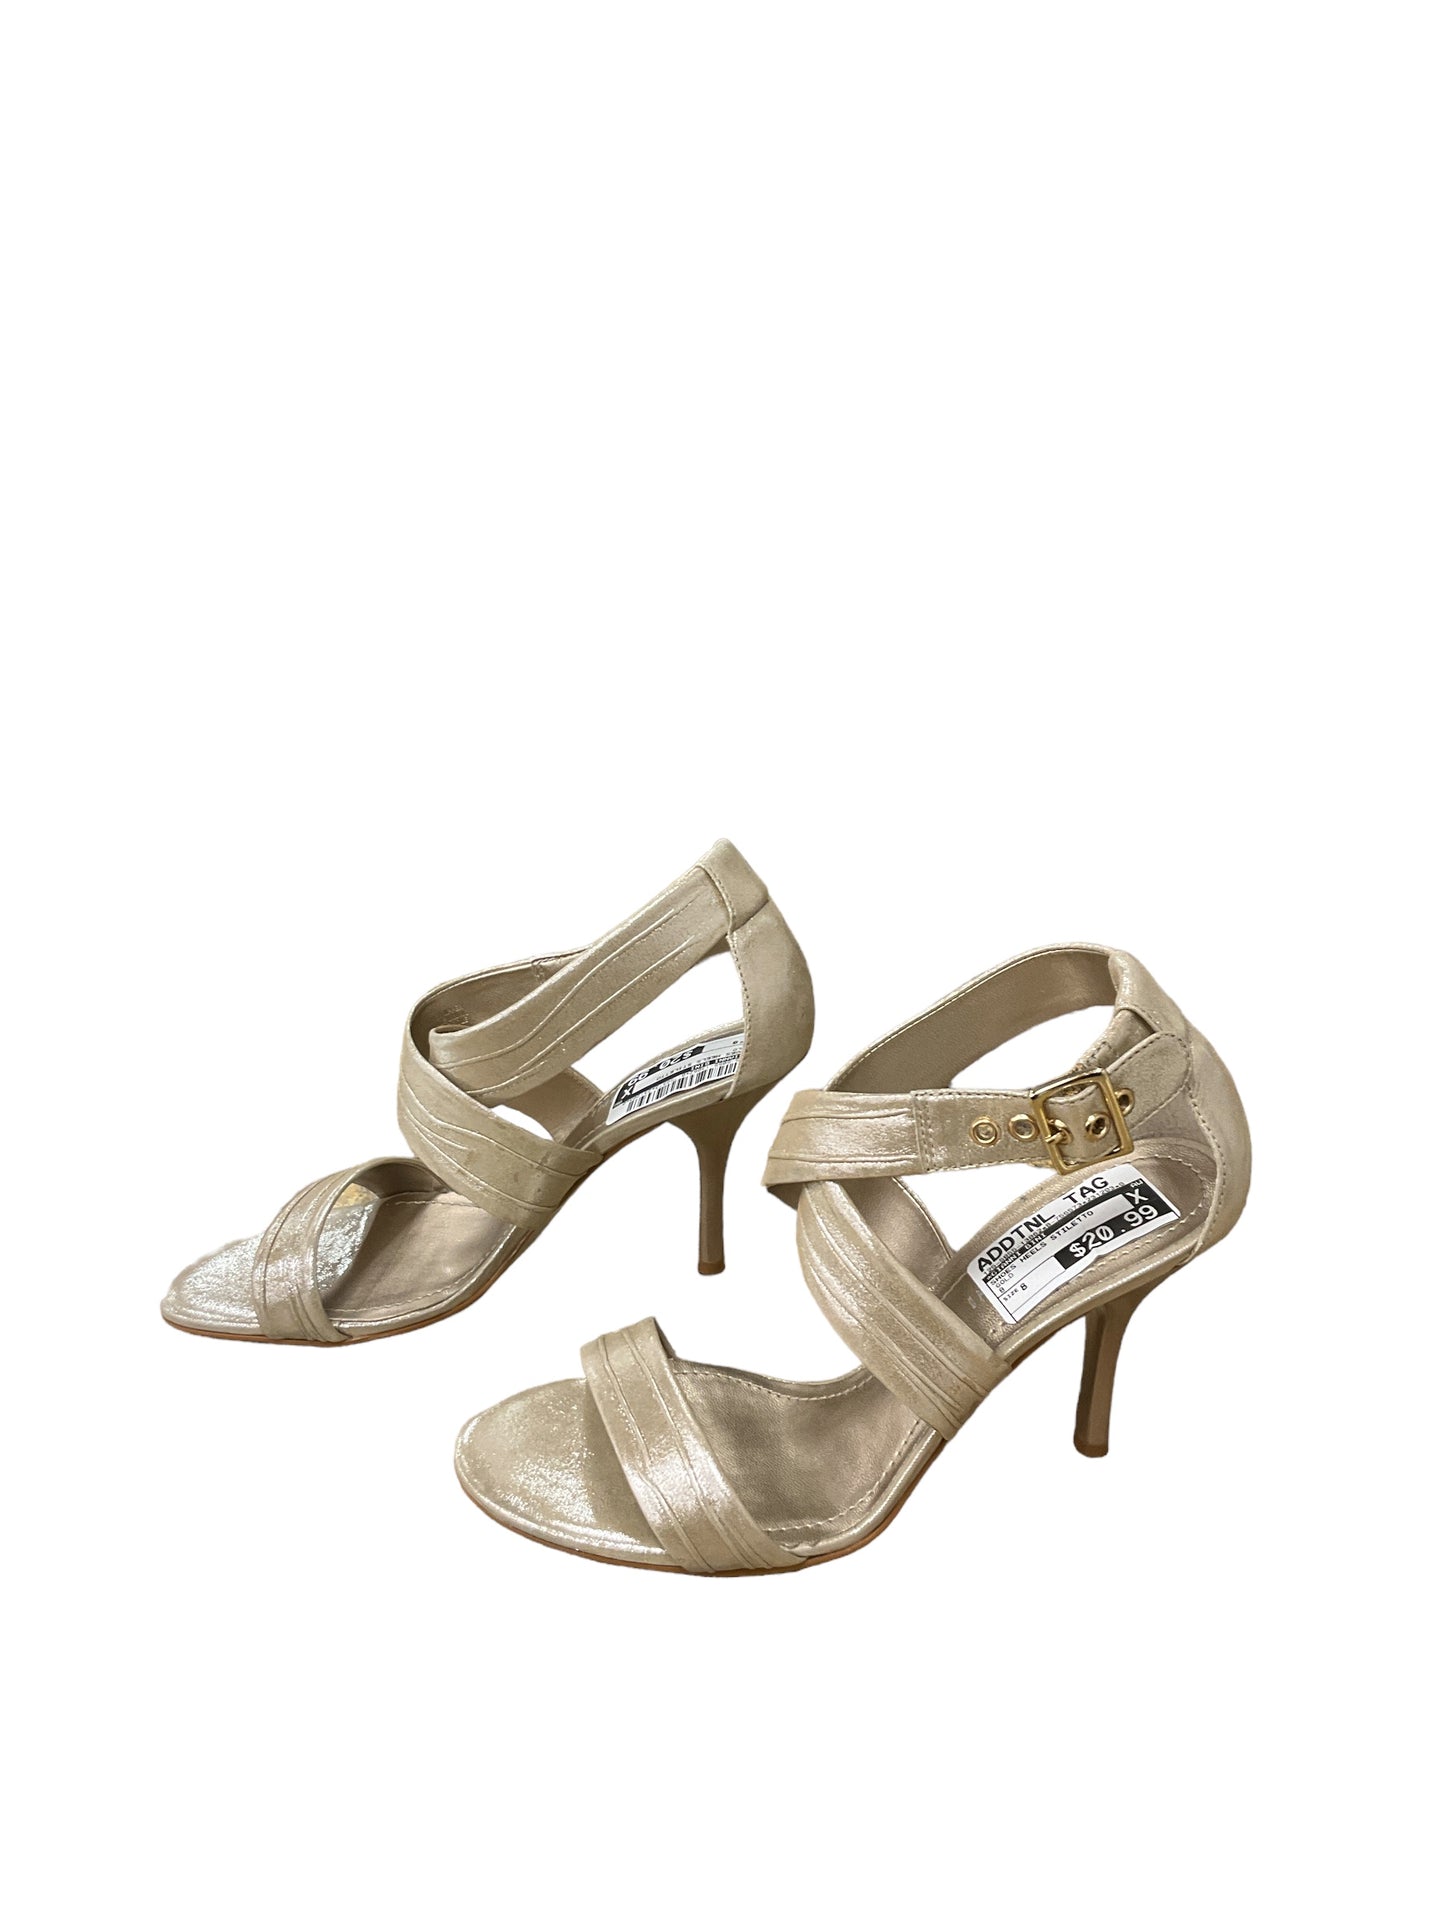 Shoes Heels Stiletto By Gianni Bini  Size: 8